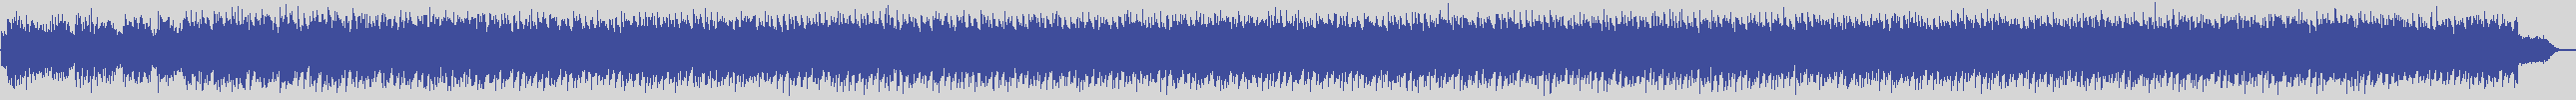 upr [UPRGOLD07] Larme Blanche - Assez! [Original Mix] audio wave form